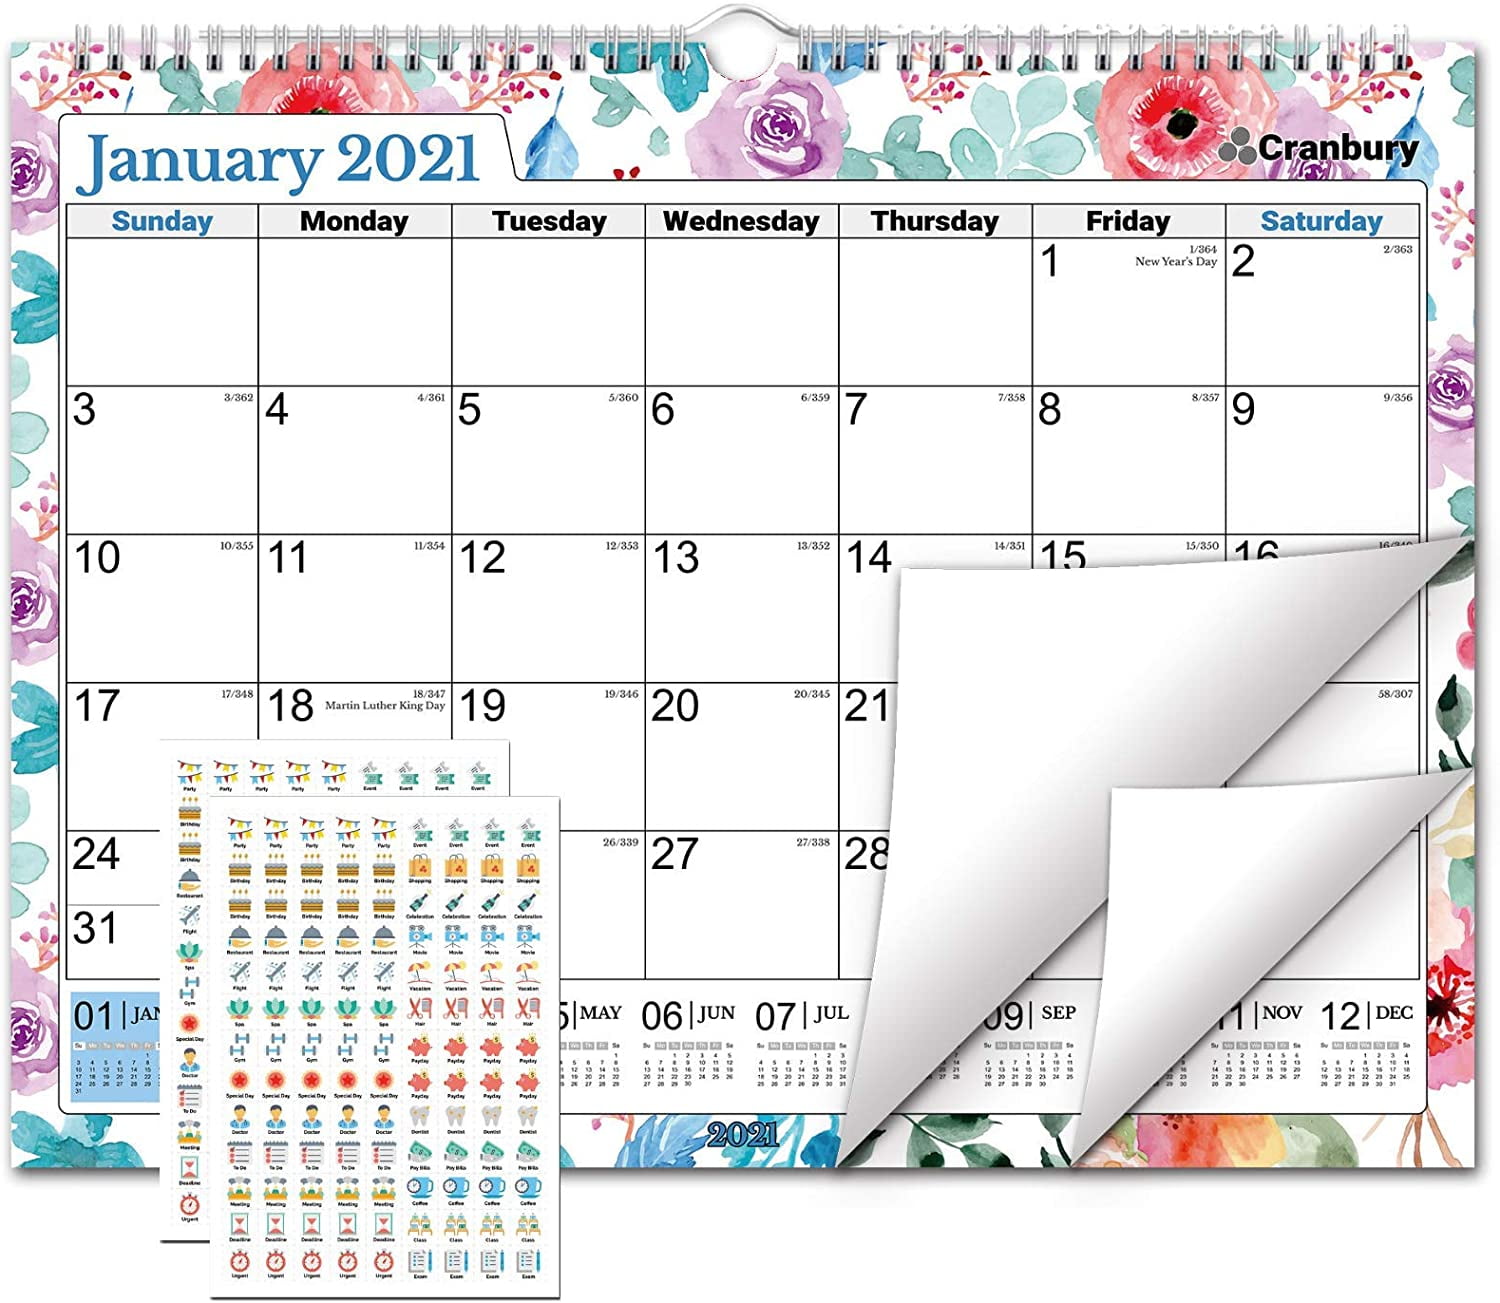 Impressions Use Small Calendar Now to December 2022 Stunning Artwork Designs CRANBURY 8.5x11 Wall Calendar 2022 - Includes Stickers as Desk Calendar or Hanging Calendar 